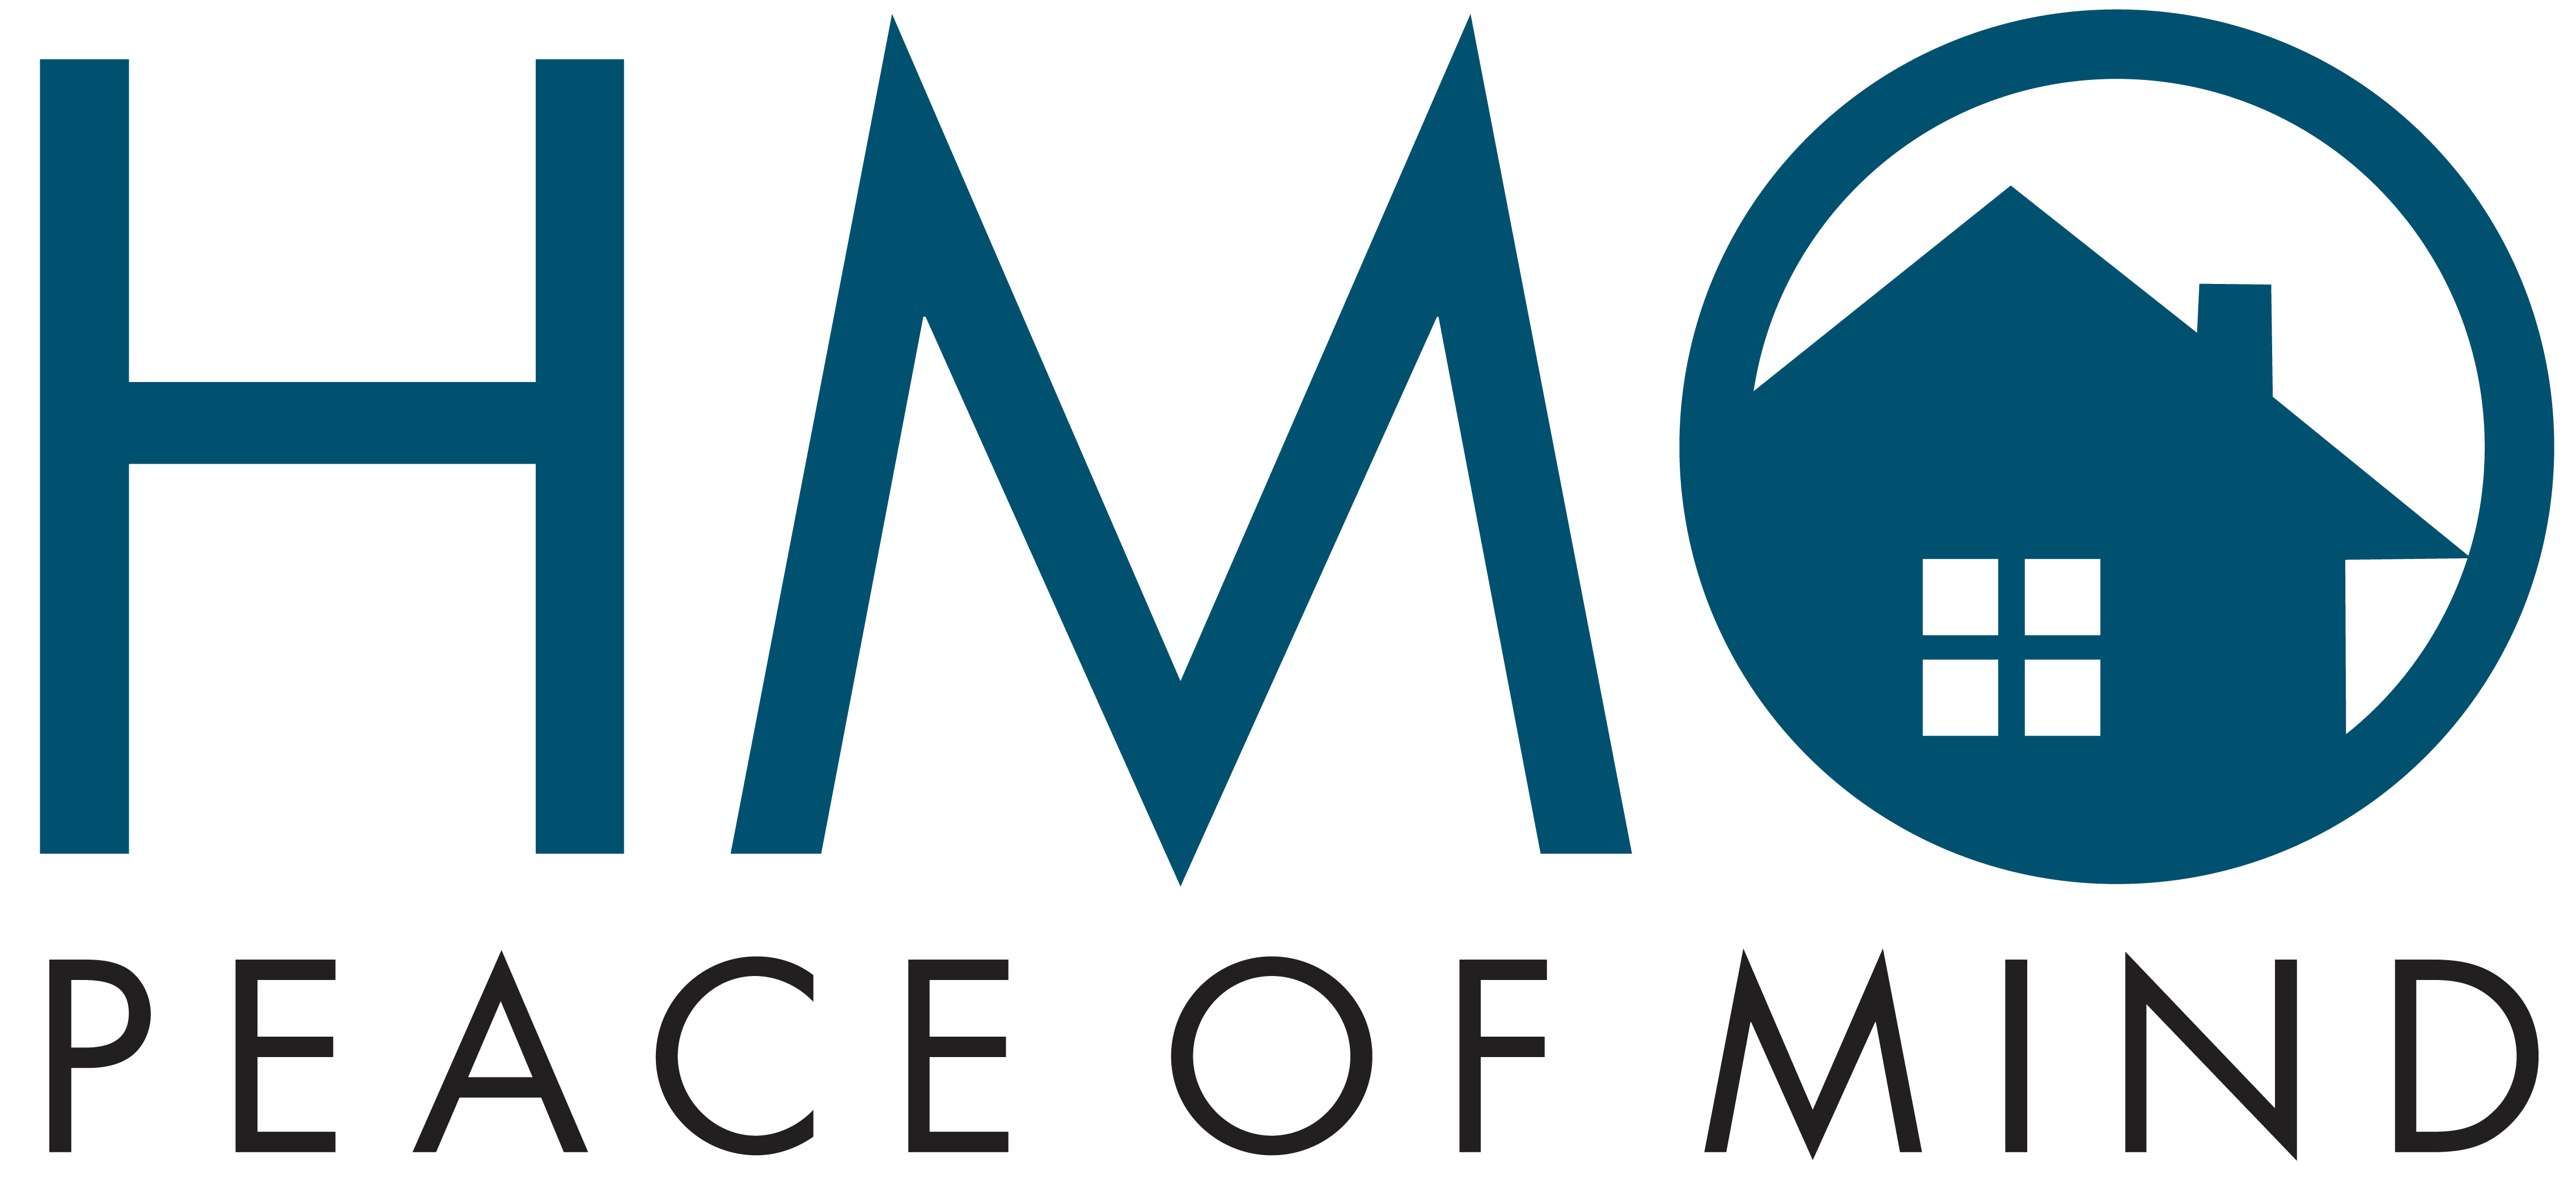 HMO Peace of Mind Ltd logo